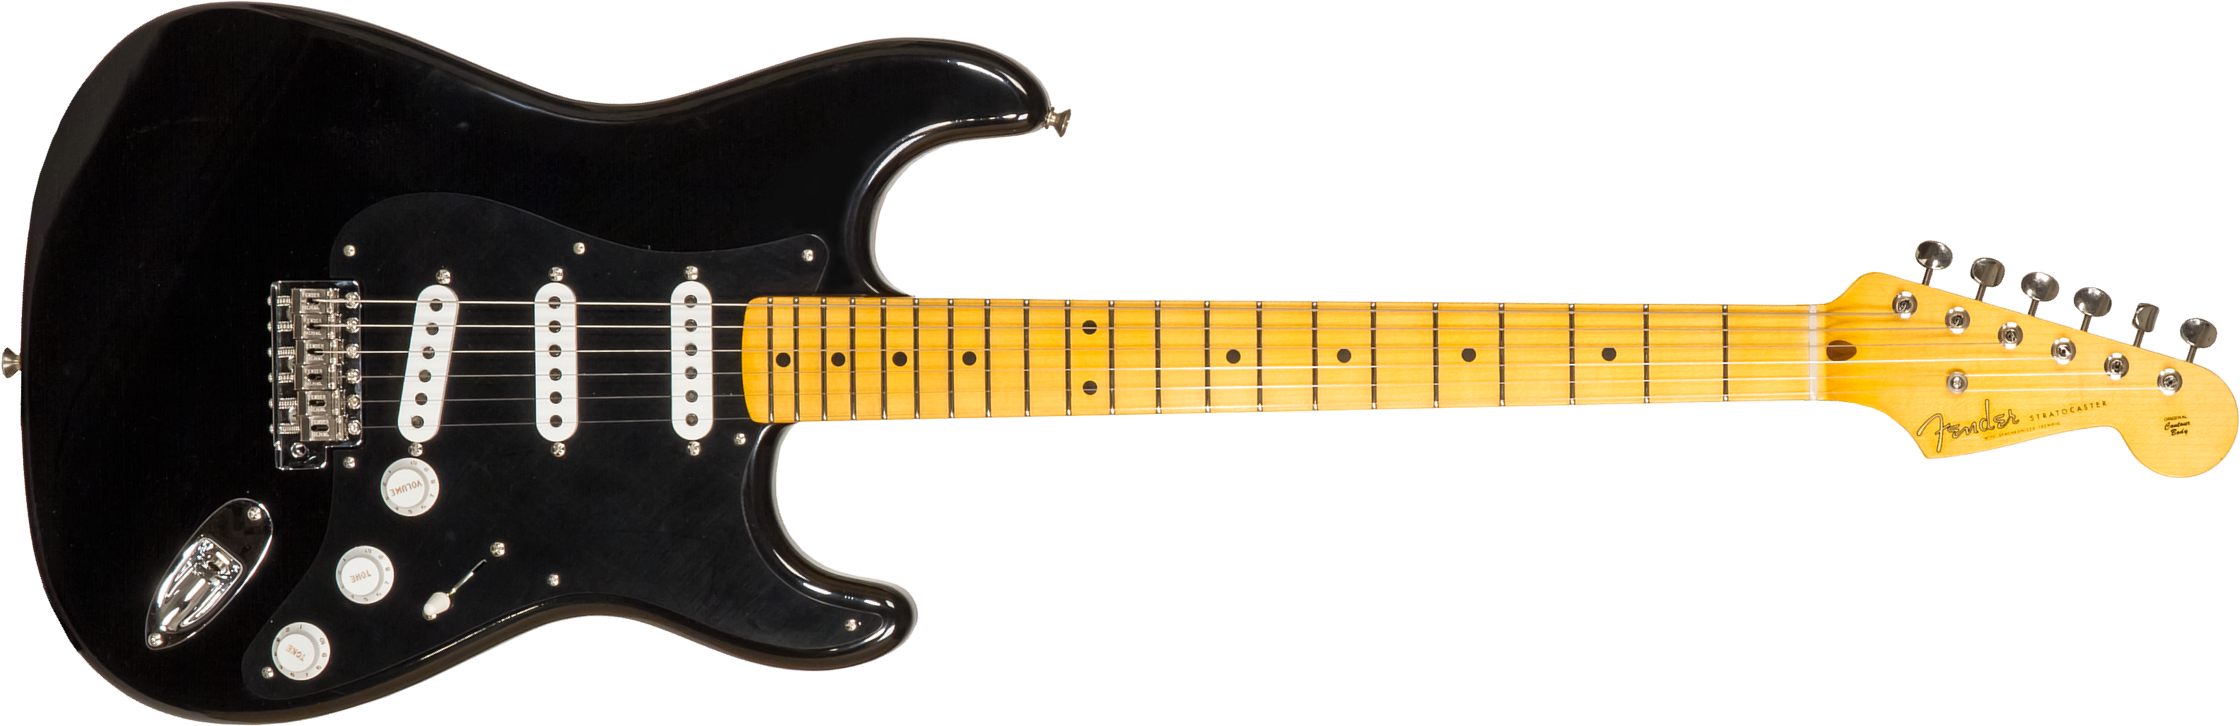 Fender Custom Shop Strat 1955 3s Trem Mn #r127877 - Closet Classic Black - Str shape electric guitar - Main picture